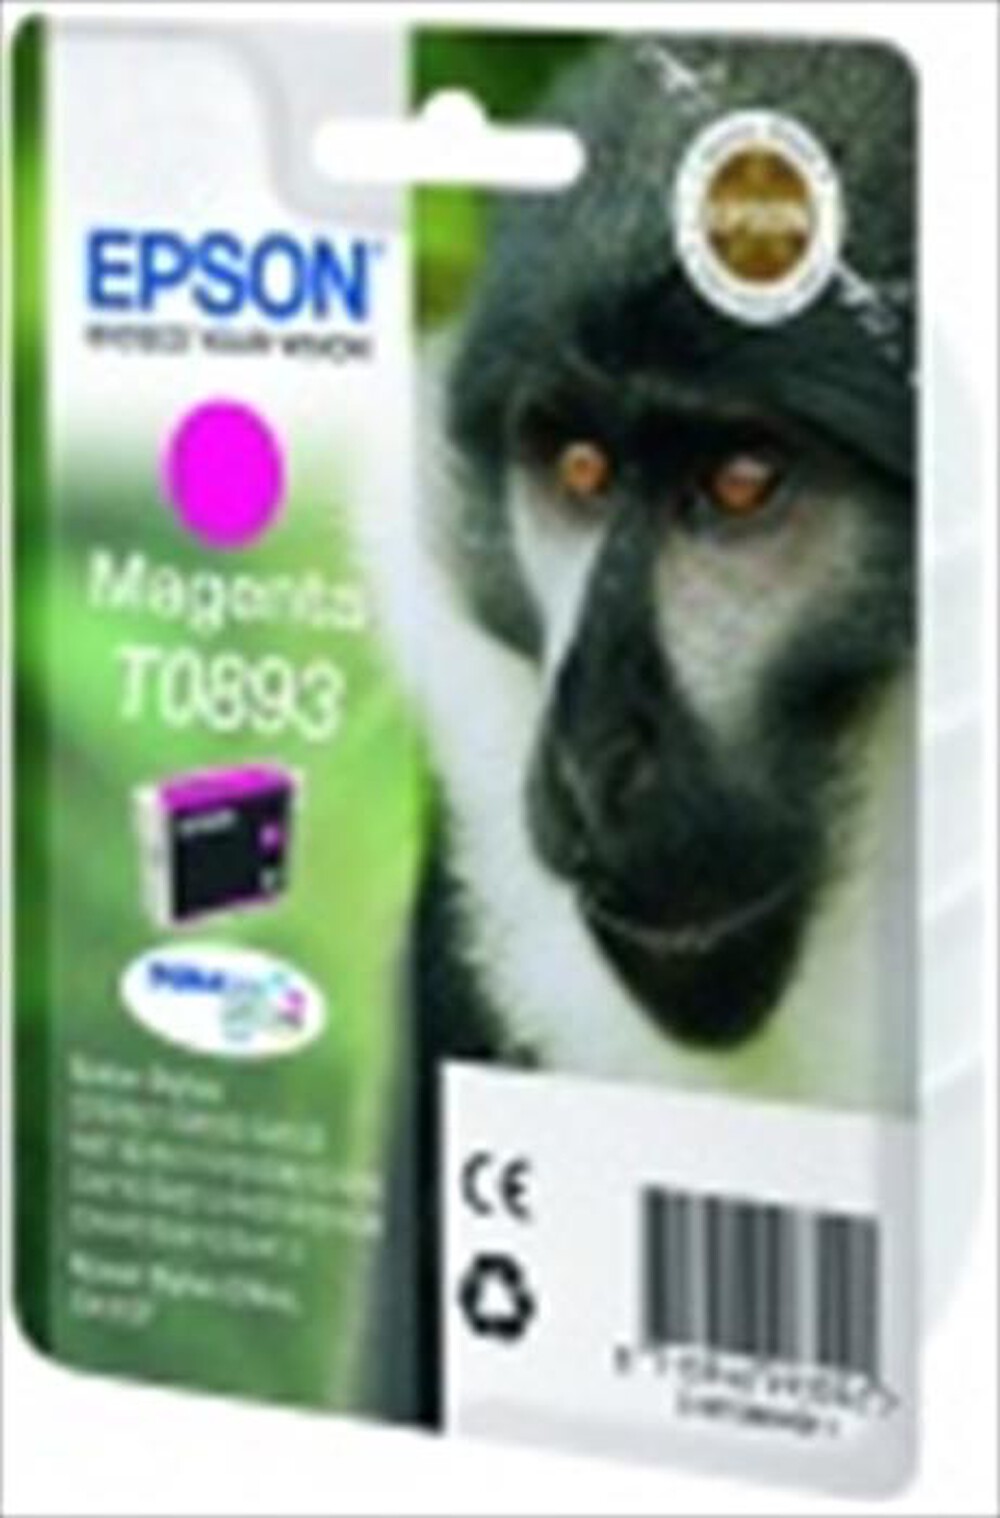 "EPSON - Cartuccia inchiostro magenta C13T08934021-Magenta"